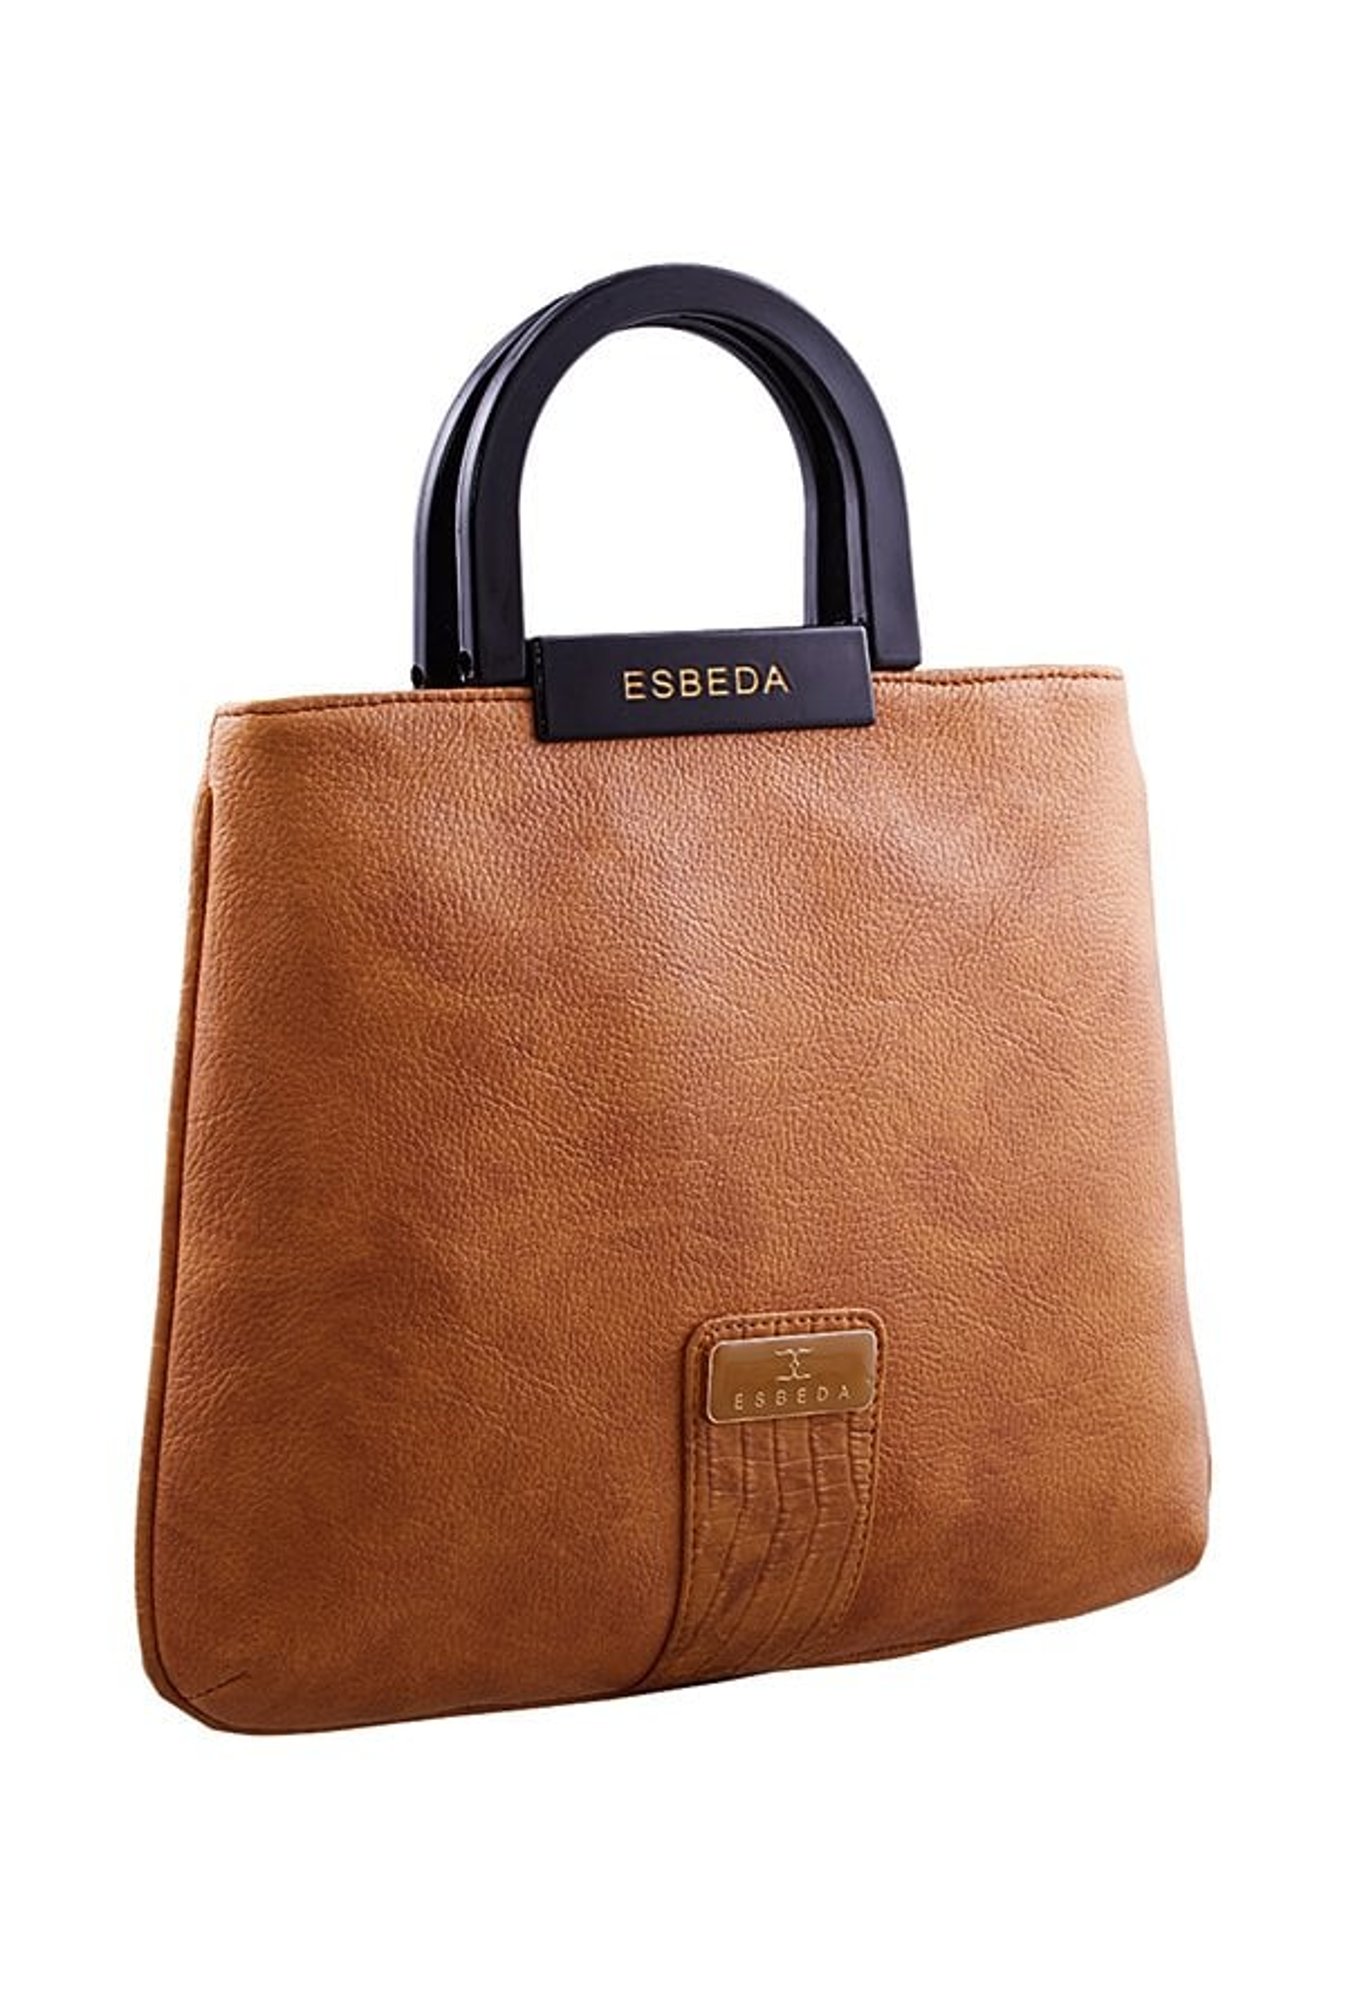 Buy ESBEDA Navy Blue Color Croco Emboss Mini Sling Bag For Women at  Amazon.in